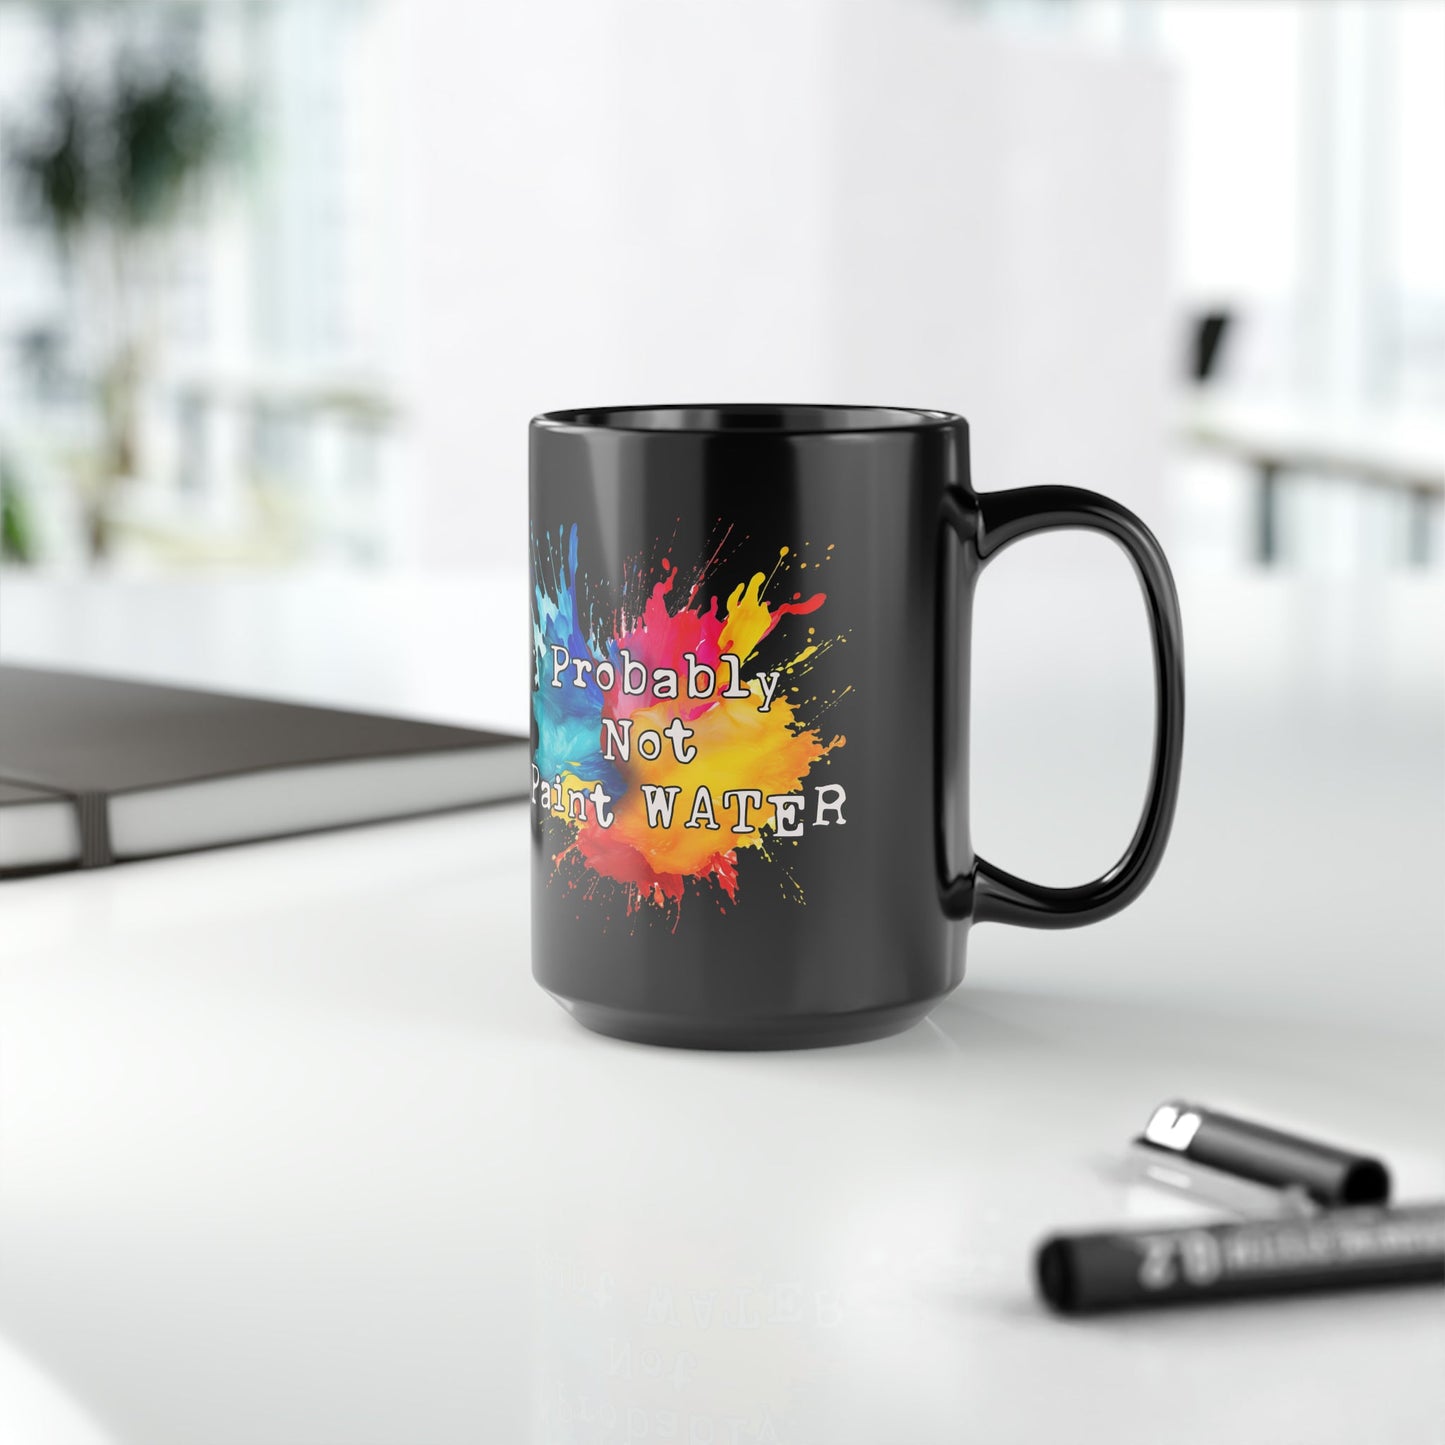 Funny Artist Coffee Mug, "Probably Not Paint Water", Personalized Mug - FlooredByArt